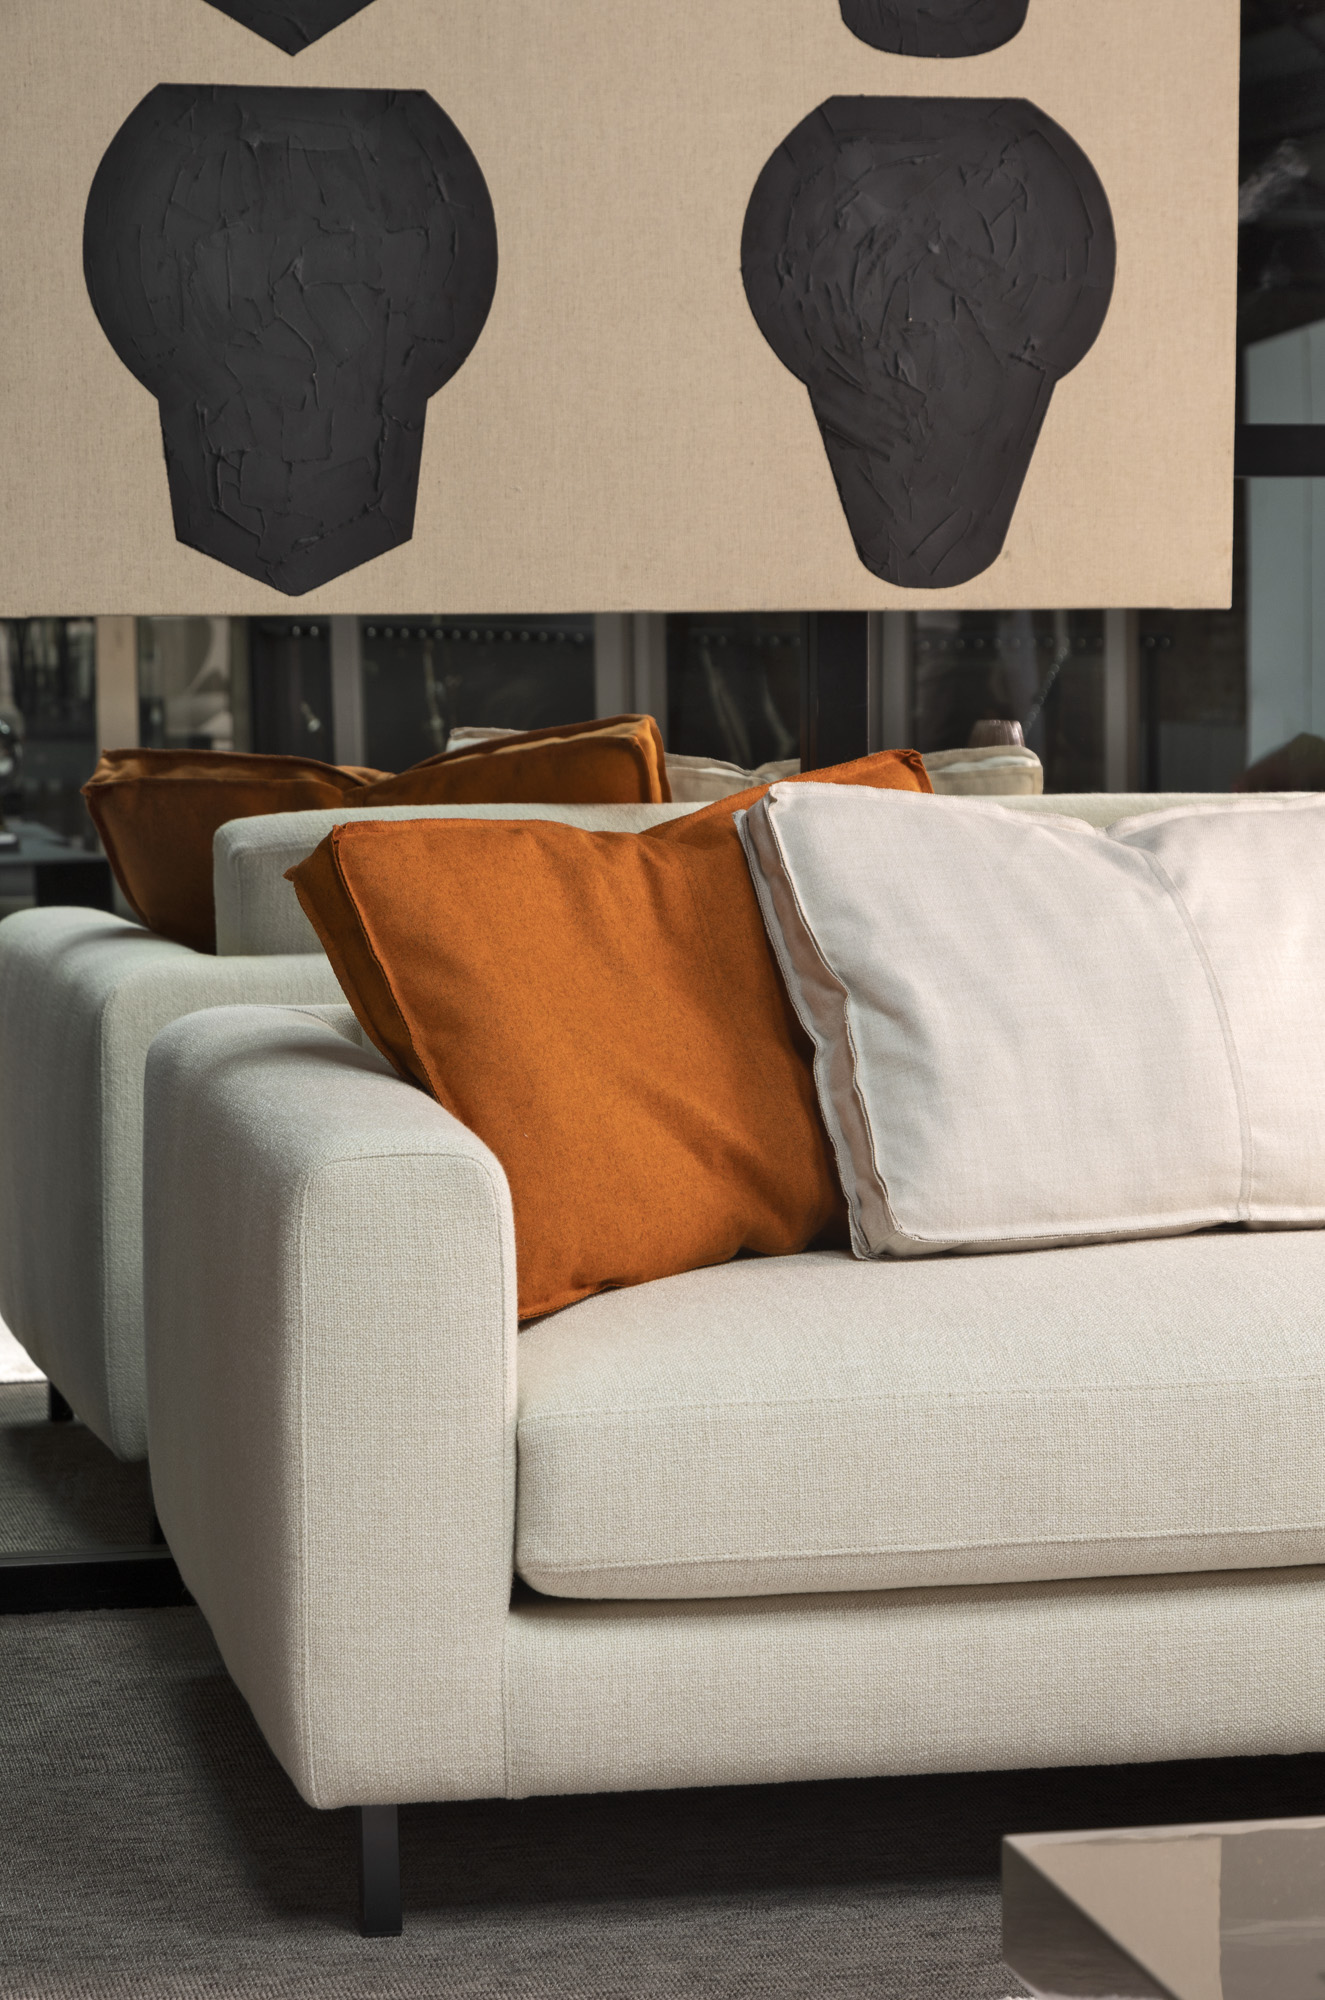 SAV mandarin set pillows interior design architecture product textiles luxury modern minimalist limited wool broadcloth 100% handmade orange blush white rectangle shape 70cmx45cm sofa look